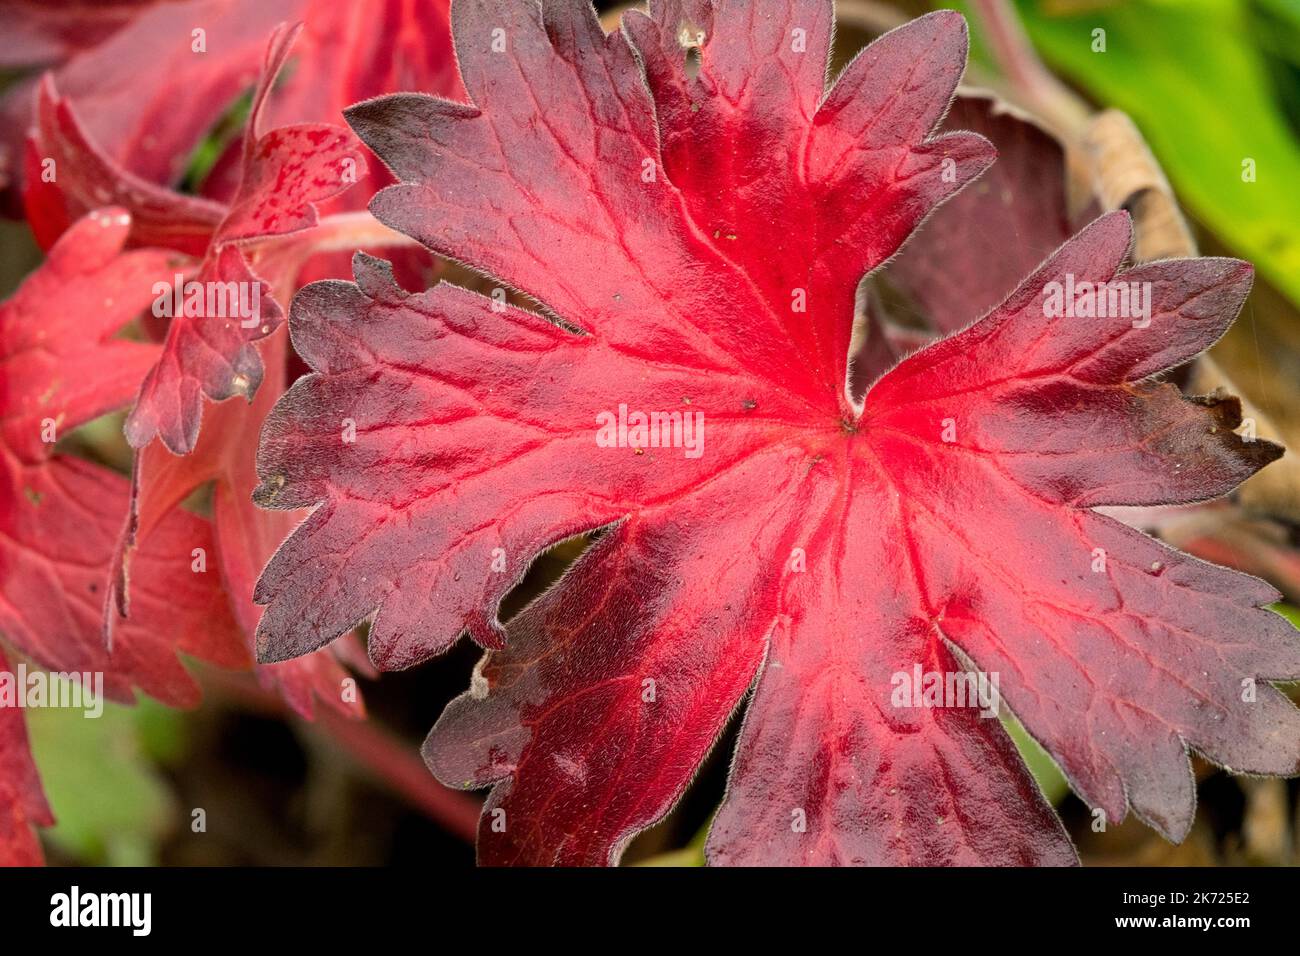 Hardy, Geranium wlassovianum, Cranesbill, Autumn, Red, Leaf dark red blush close up autumnal colour Stock Photo